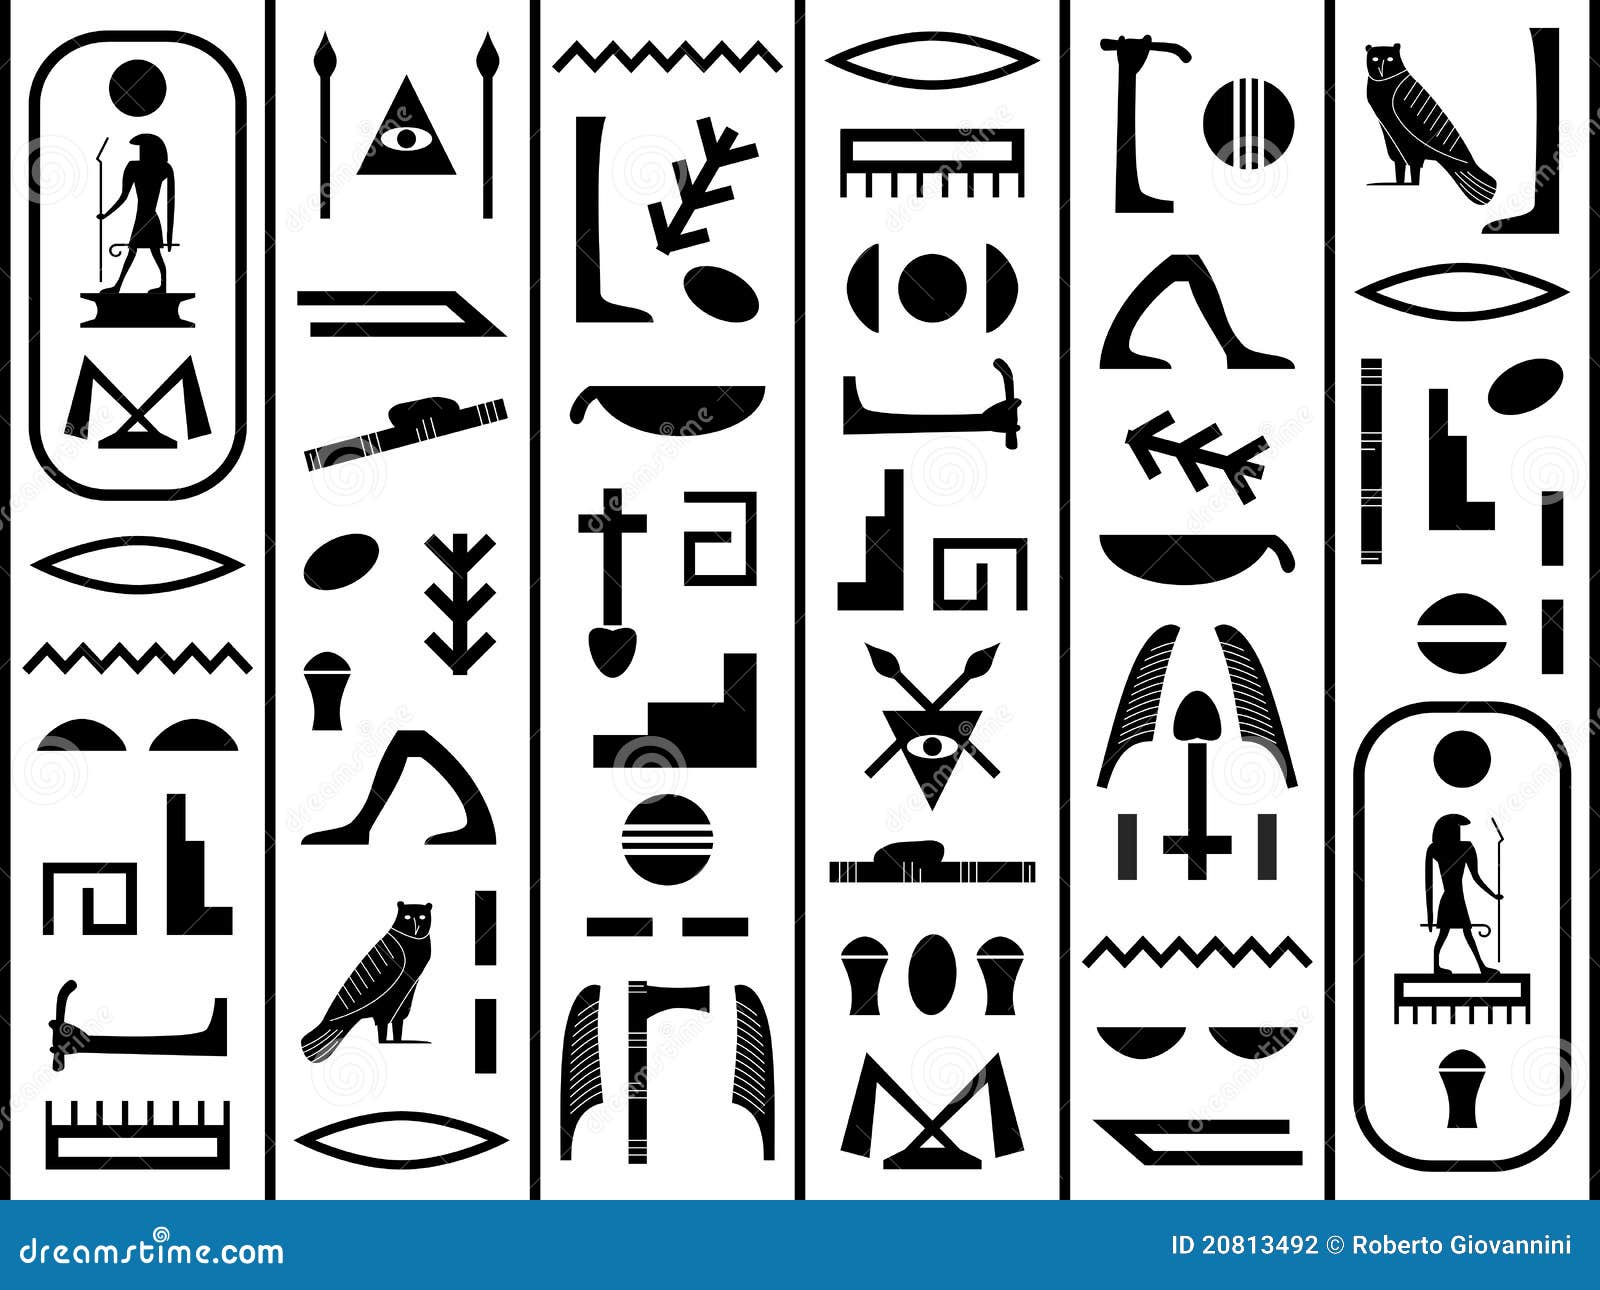 black-white-hieroglyphics-20813492.jpg